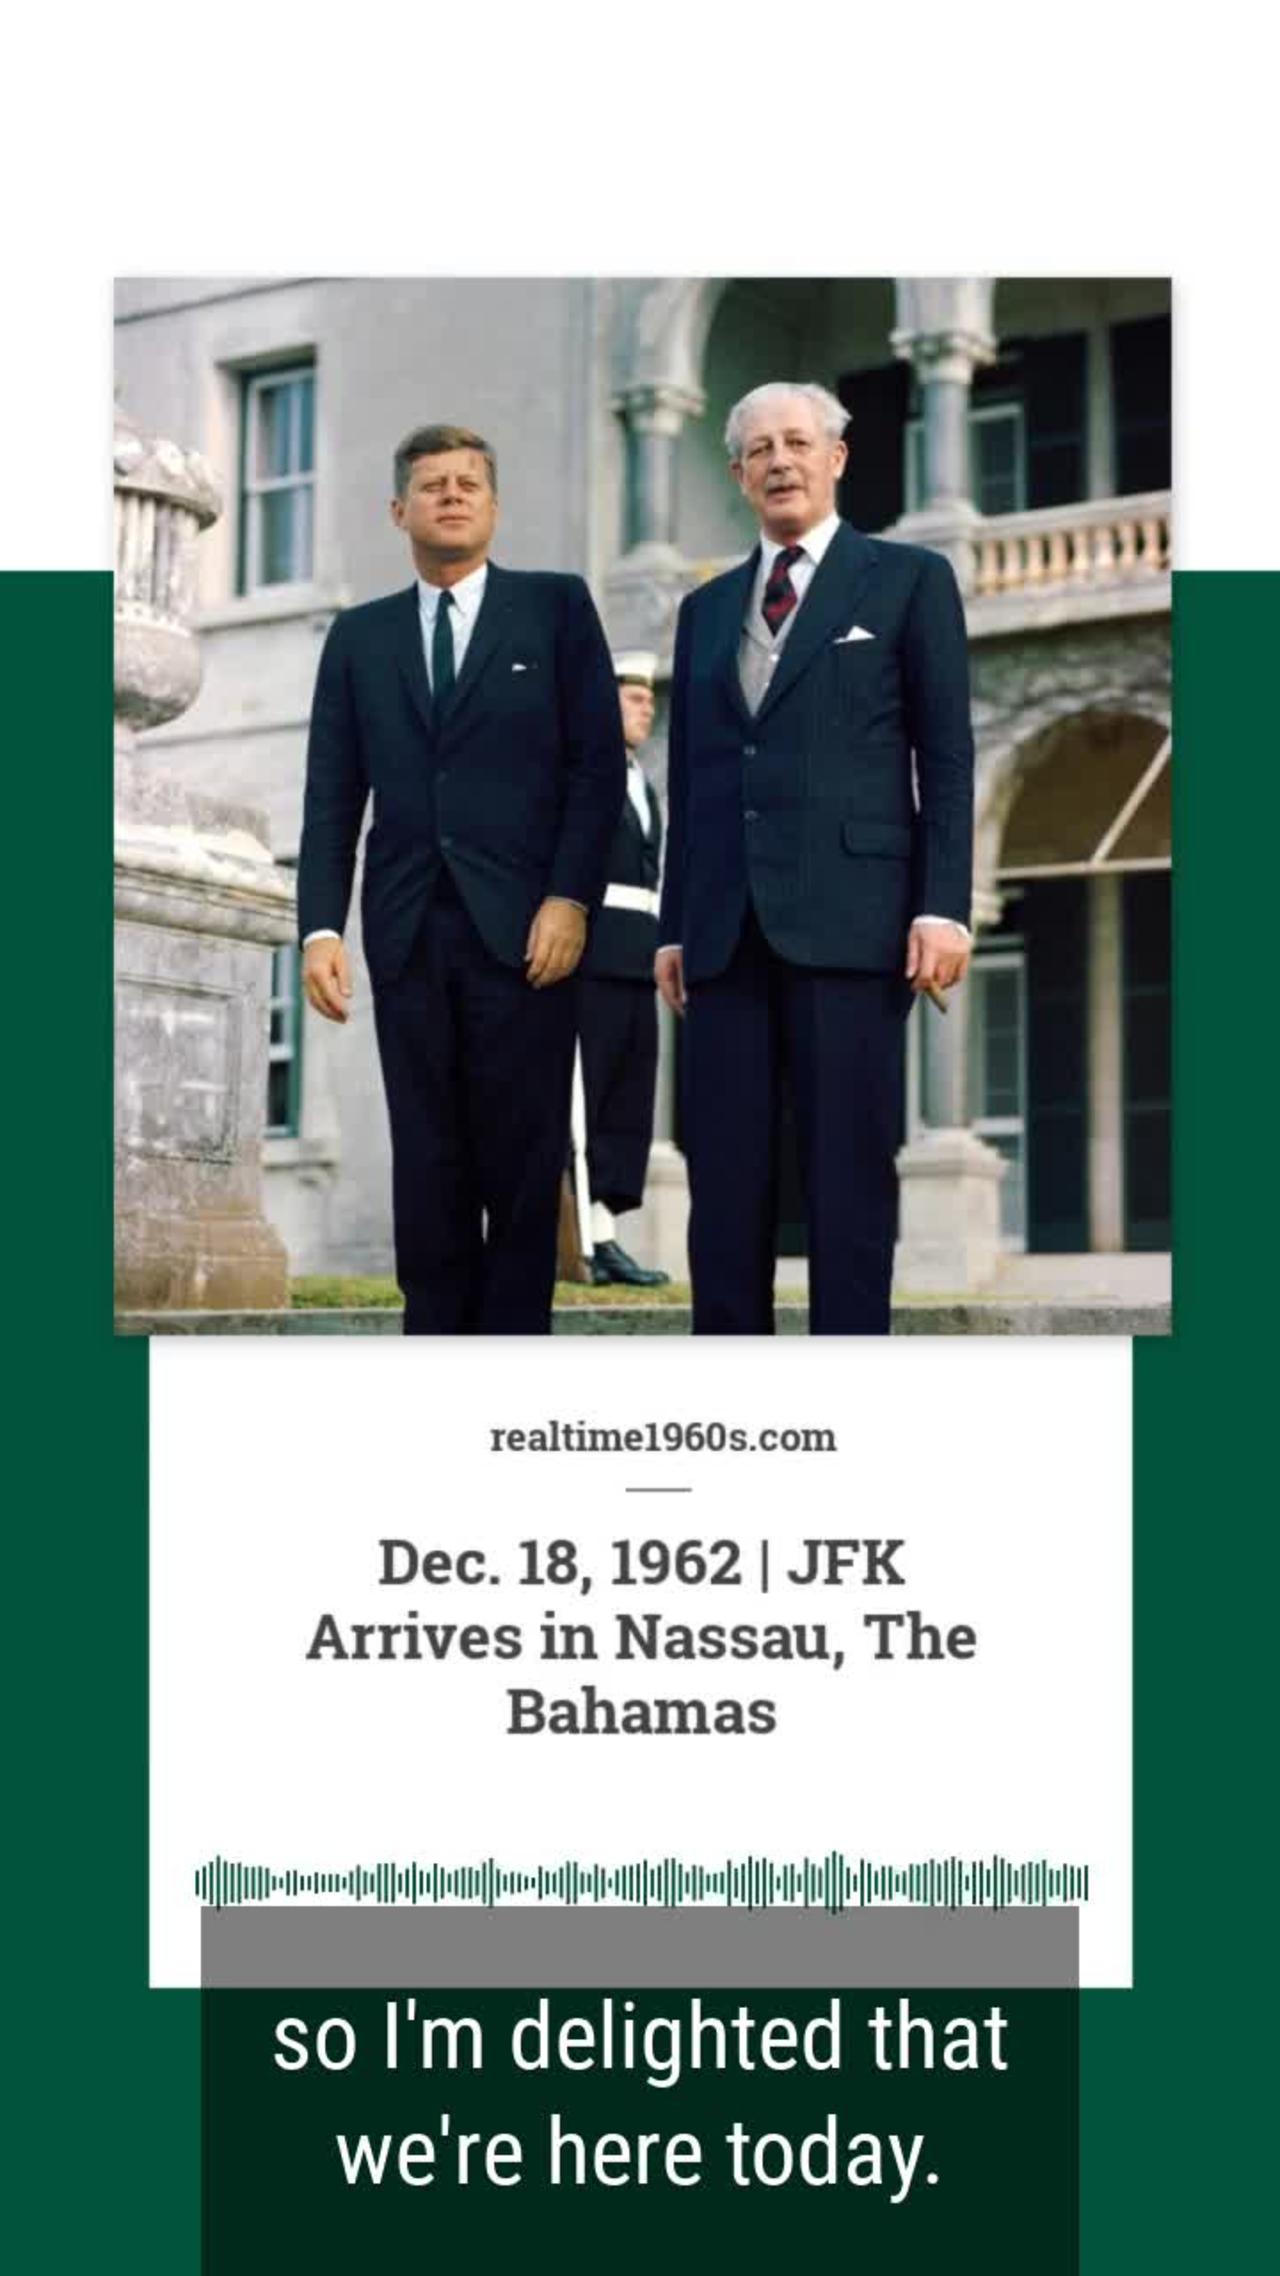 Dec. 18, 1962 - JFK Remarks to Harold Macmillan in The Bahamas